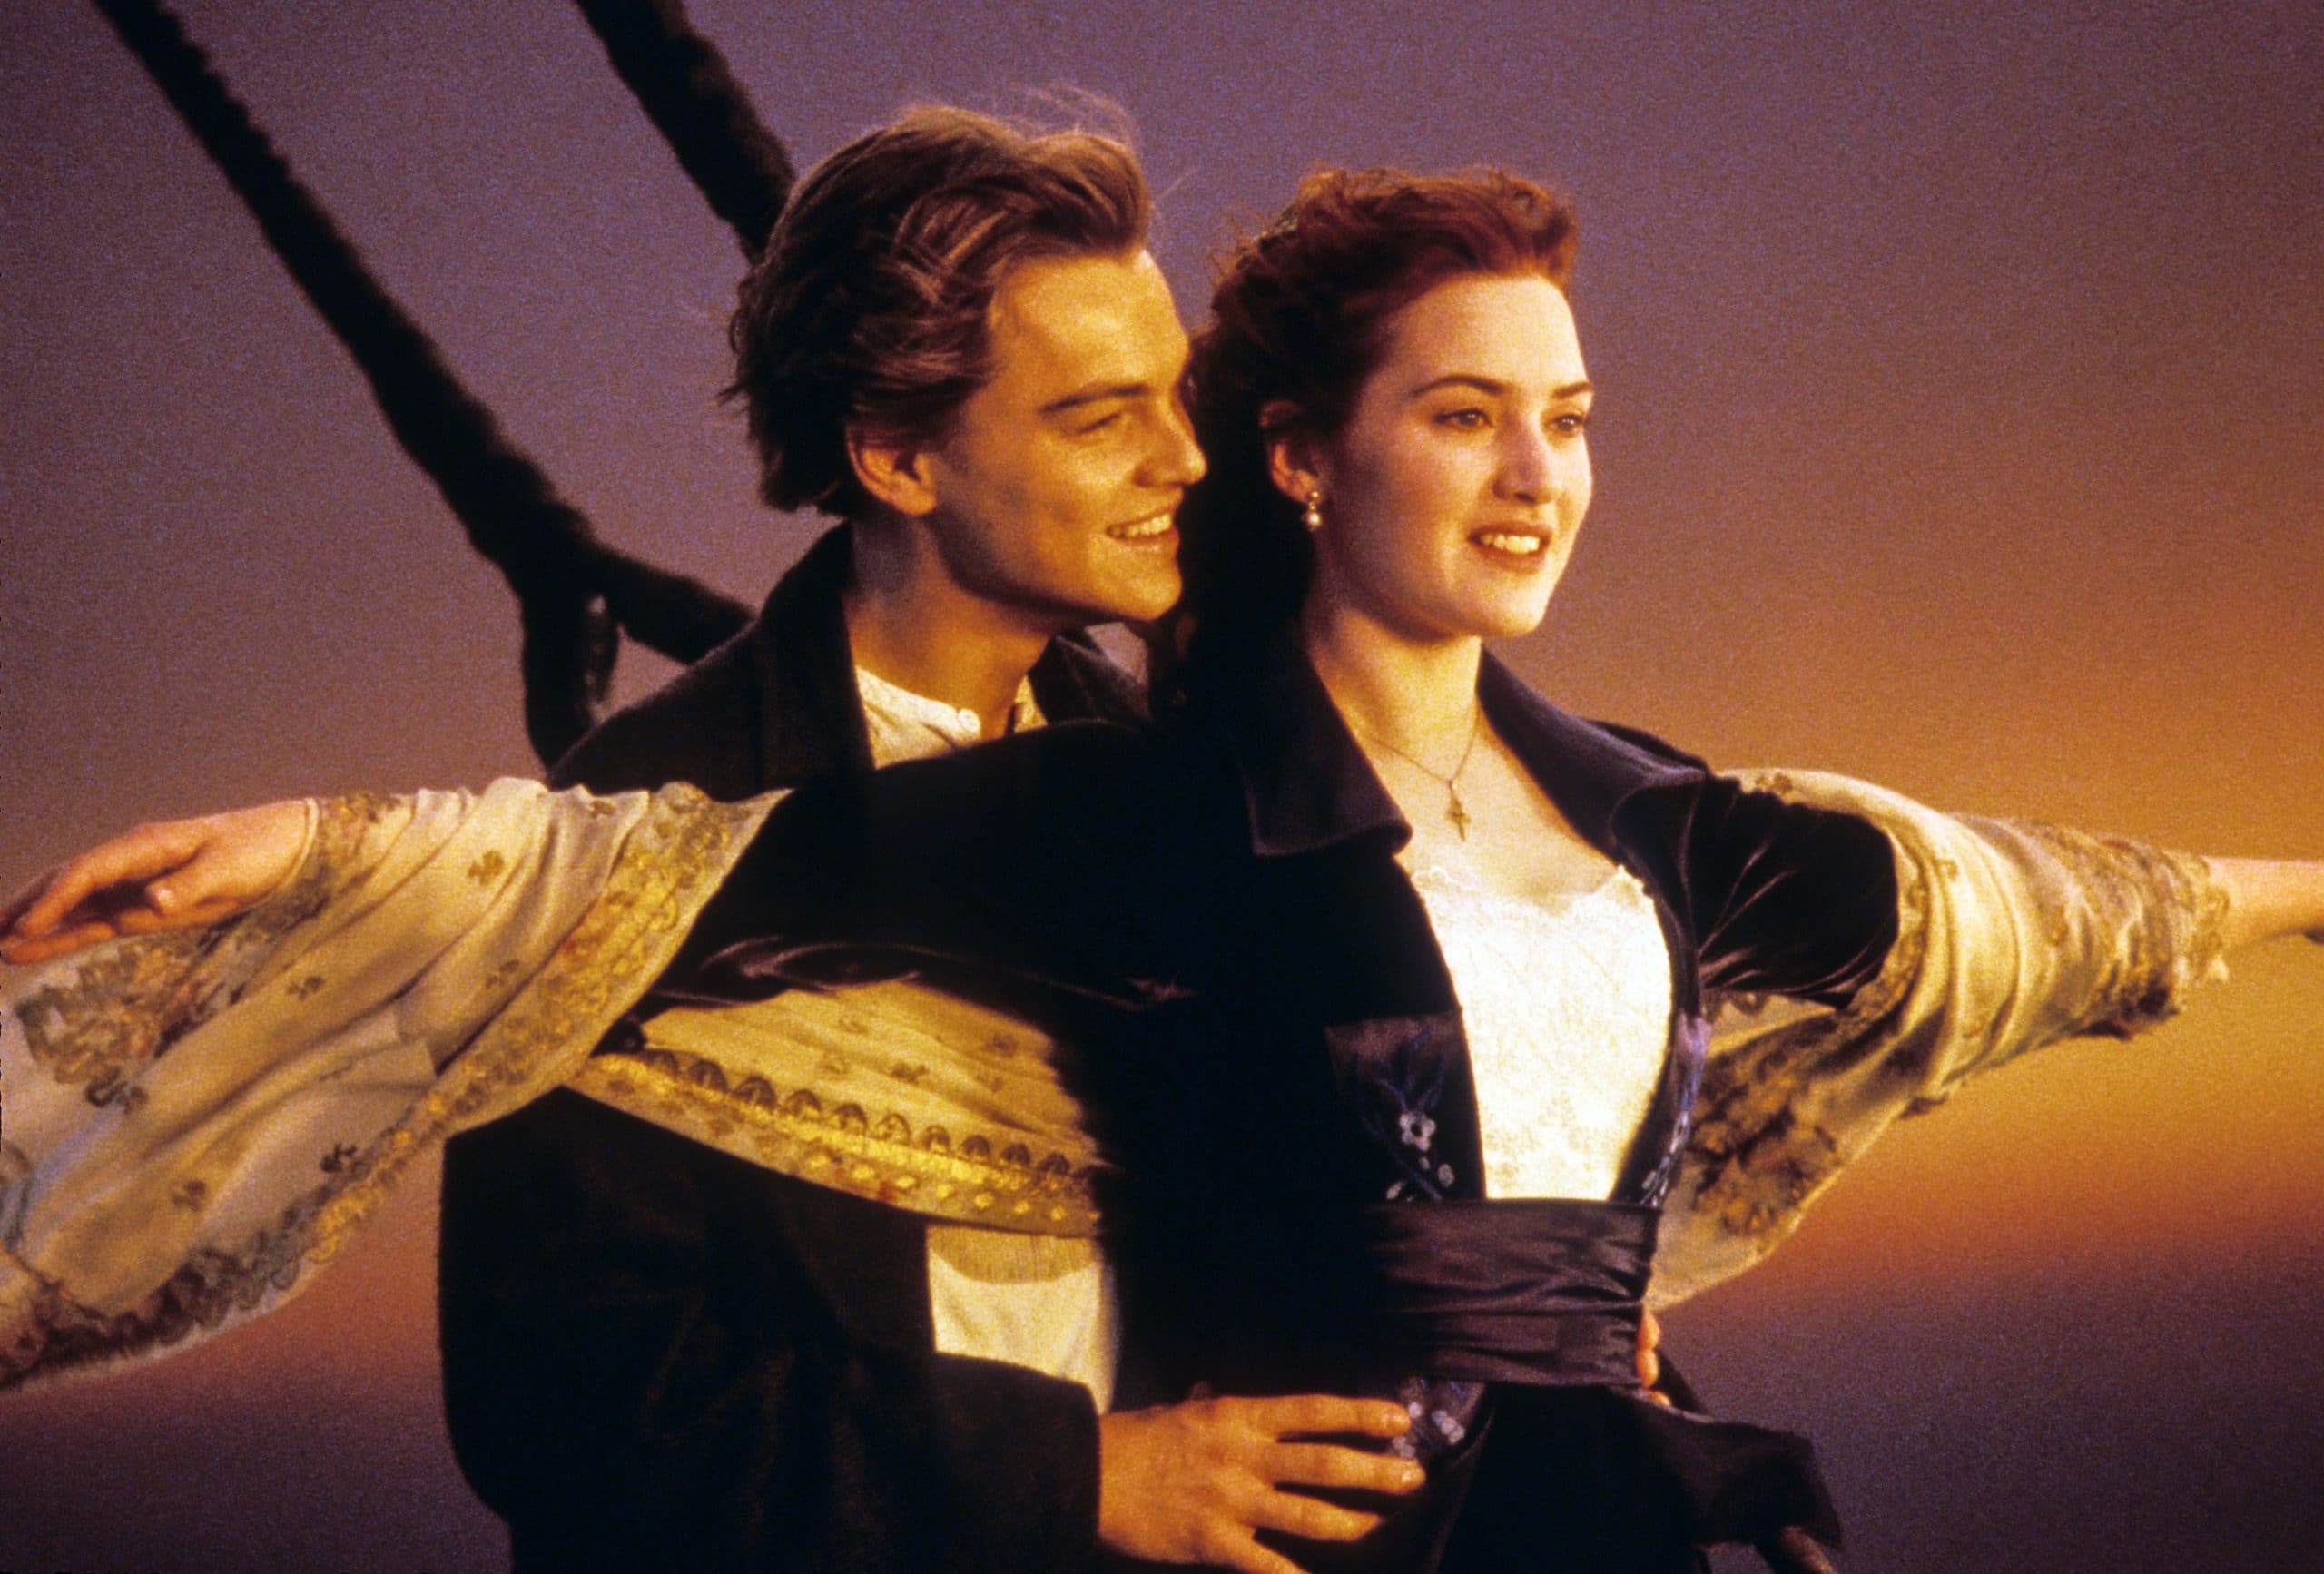 TITANIC, from left: Leonardo DiCaprio, Kate Winslet, 1997